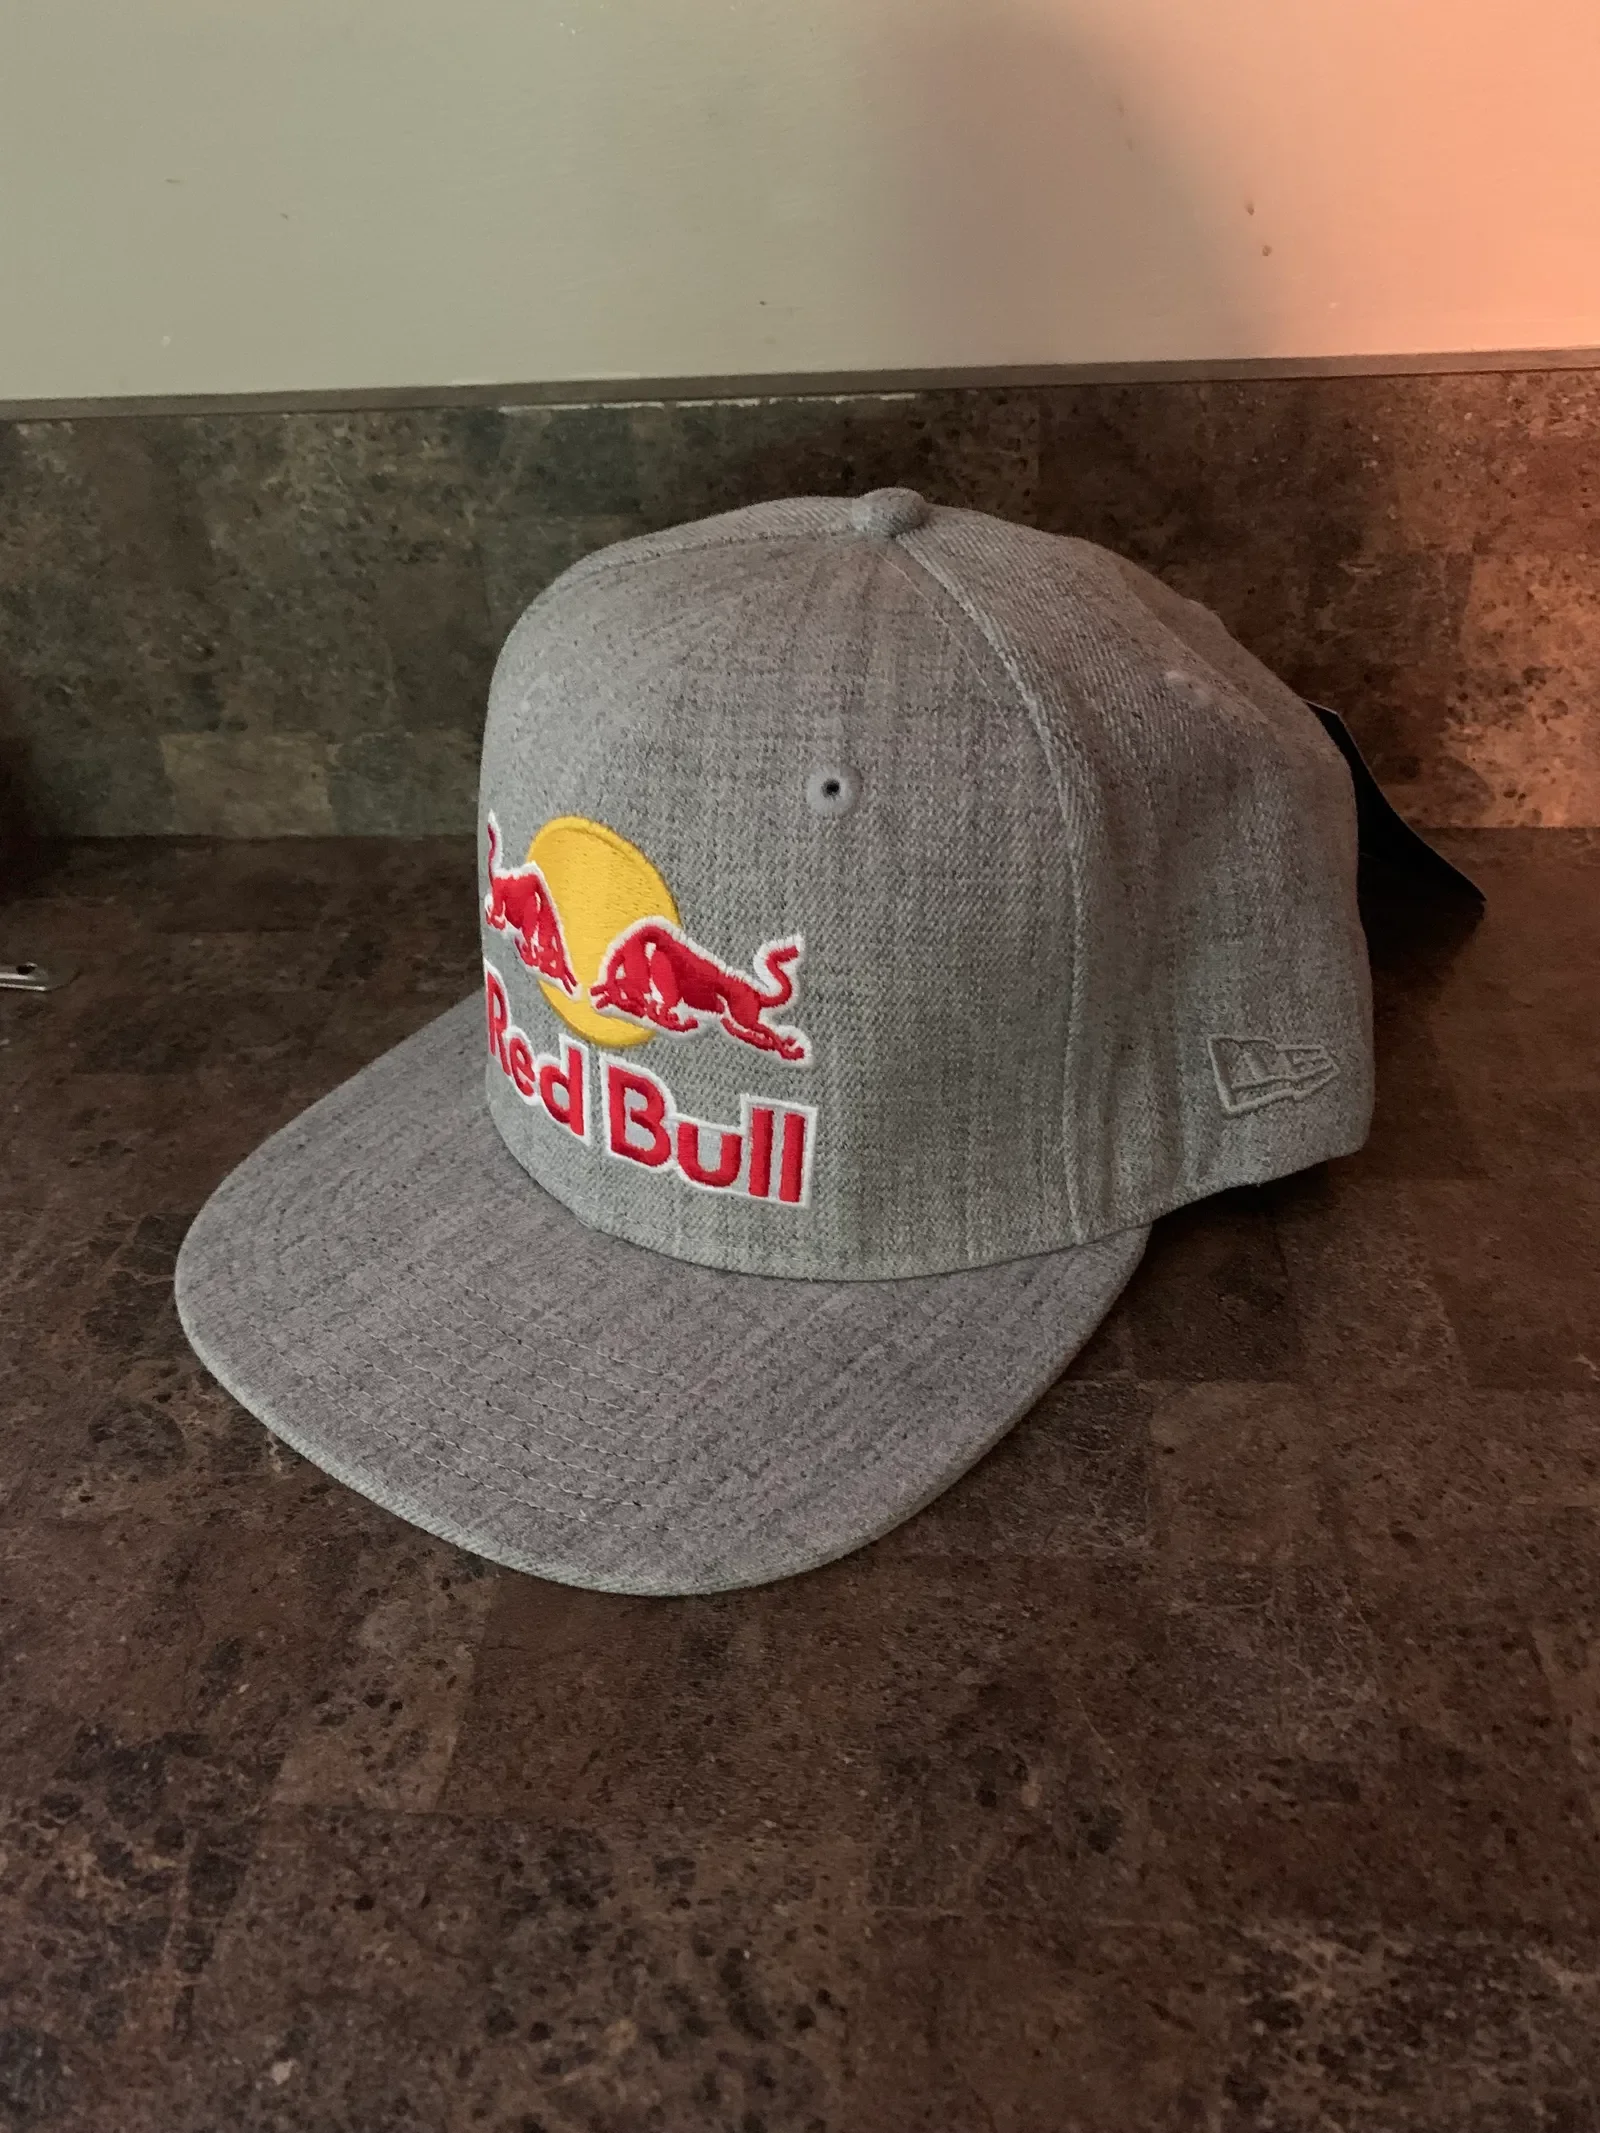 NEW! Red Bull Athlete Only Hats MX Locker, 40% OFF